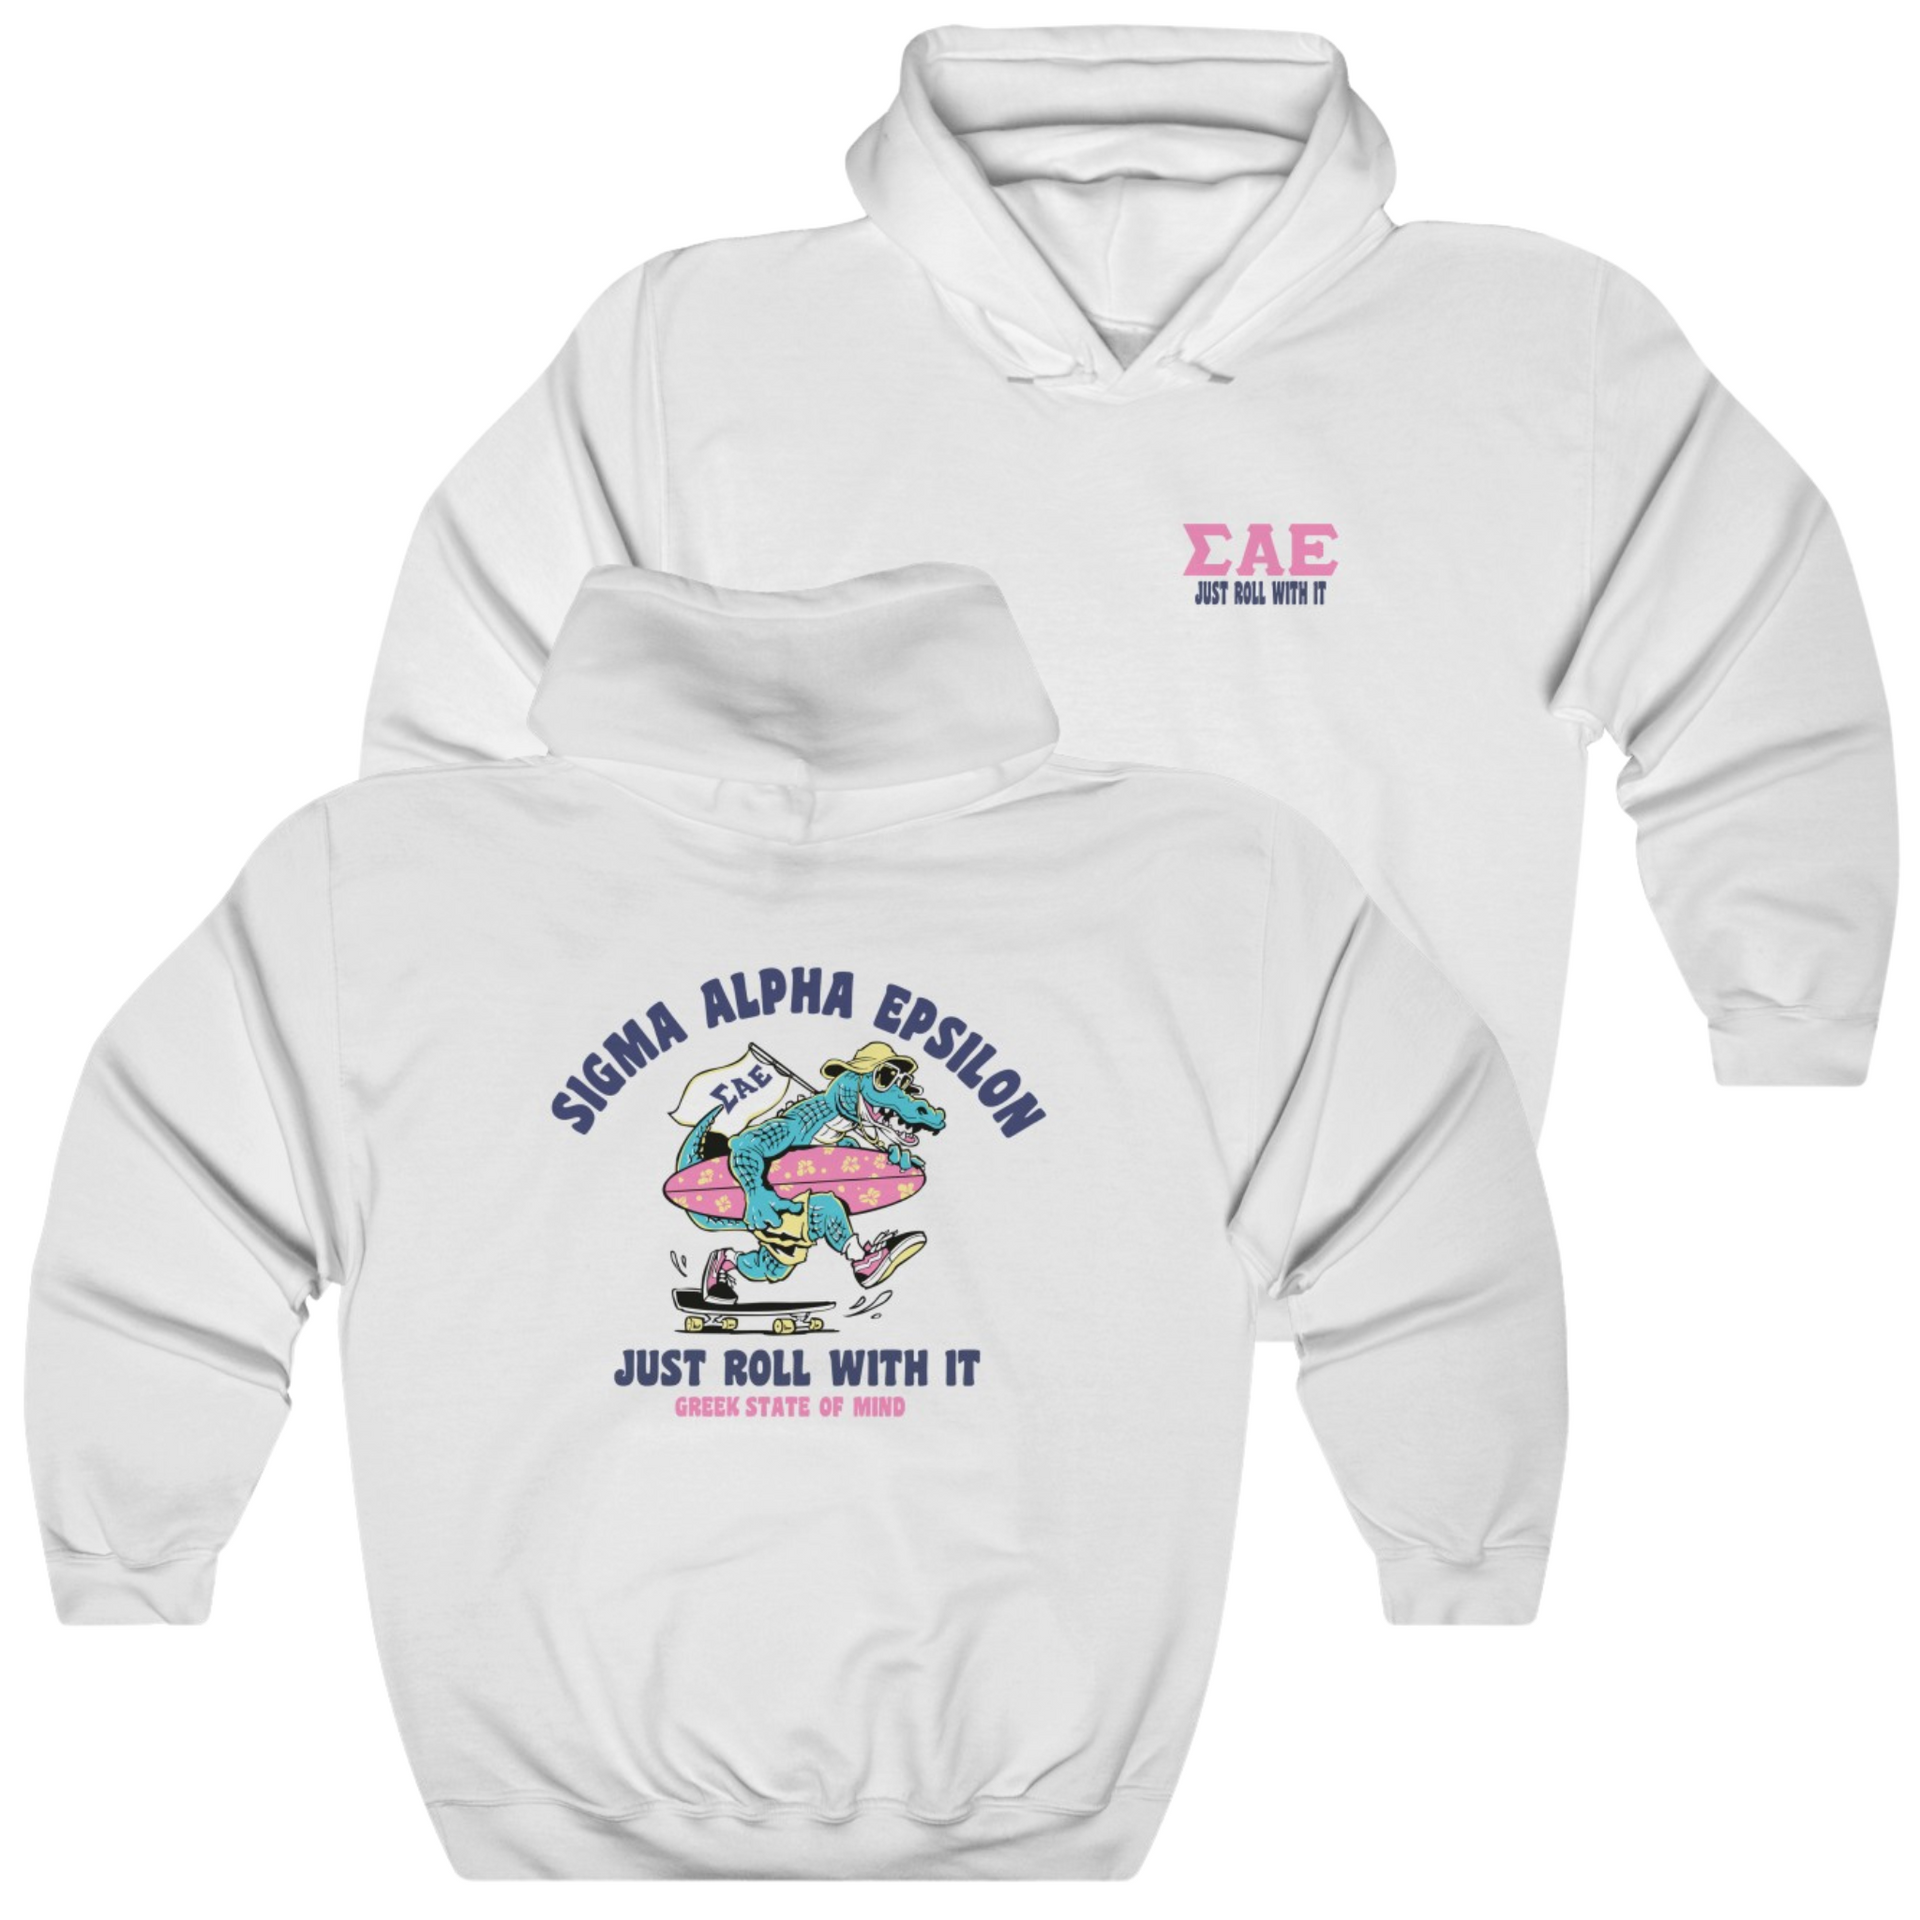 White Sigma Alpha Epsilon Graphic Hoodie | Alligator Skater | Sigma Alpha Epsilon Clothing and Merchandise